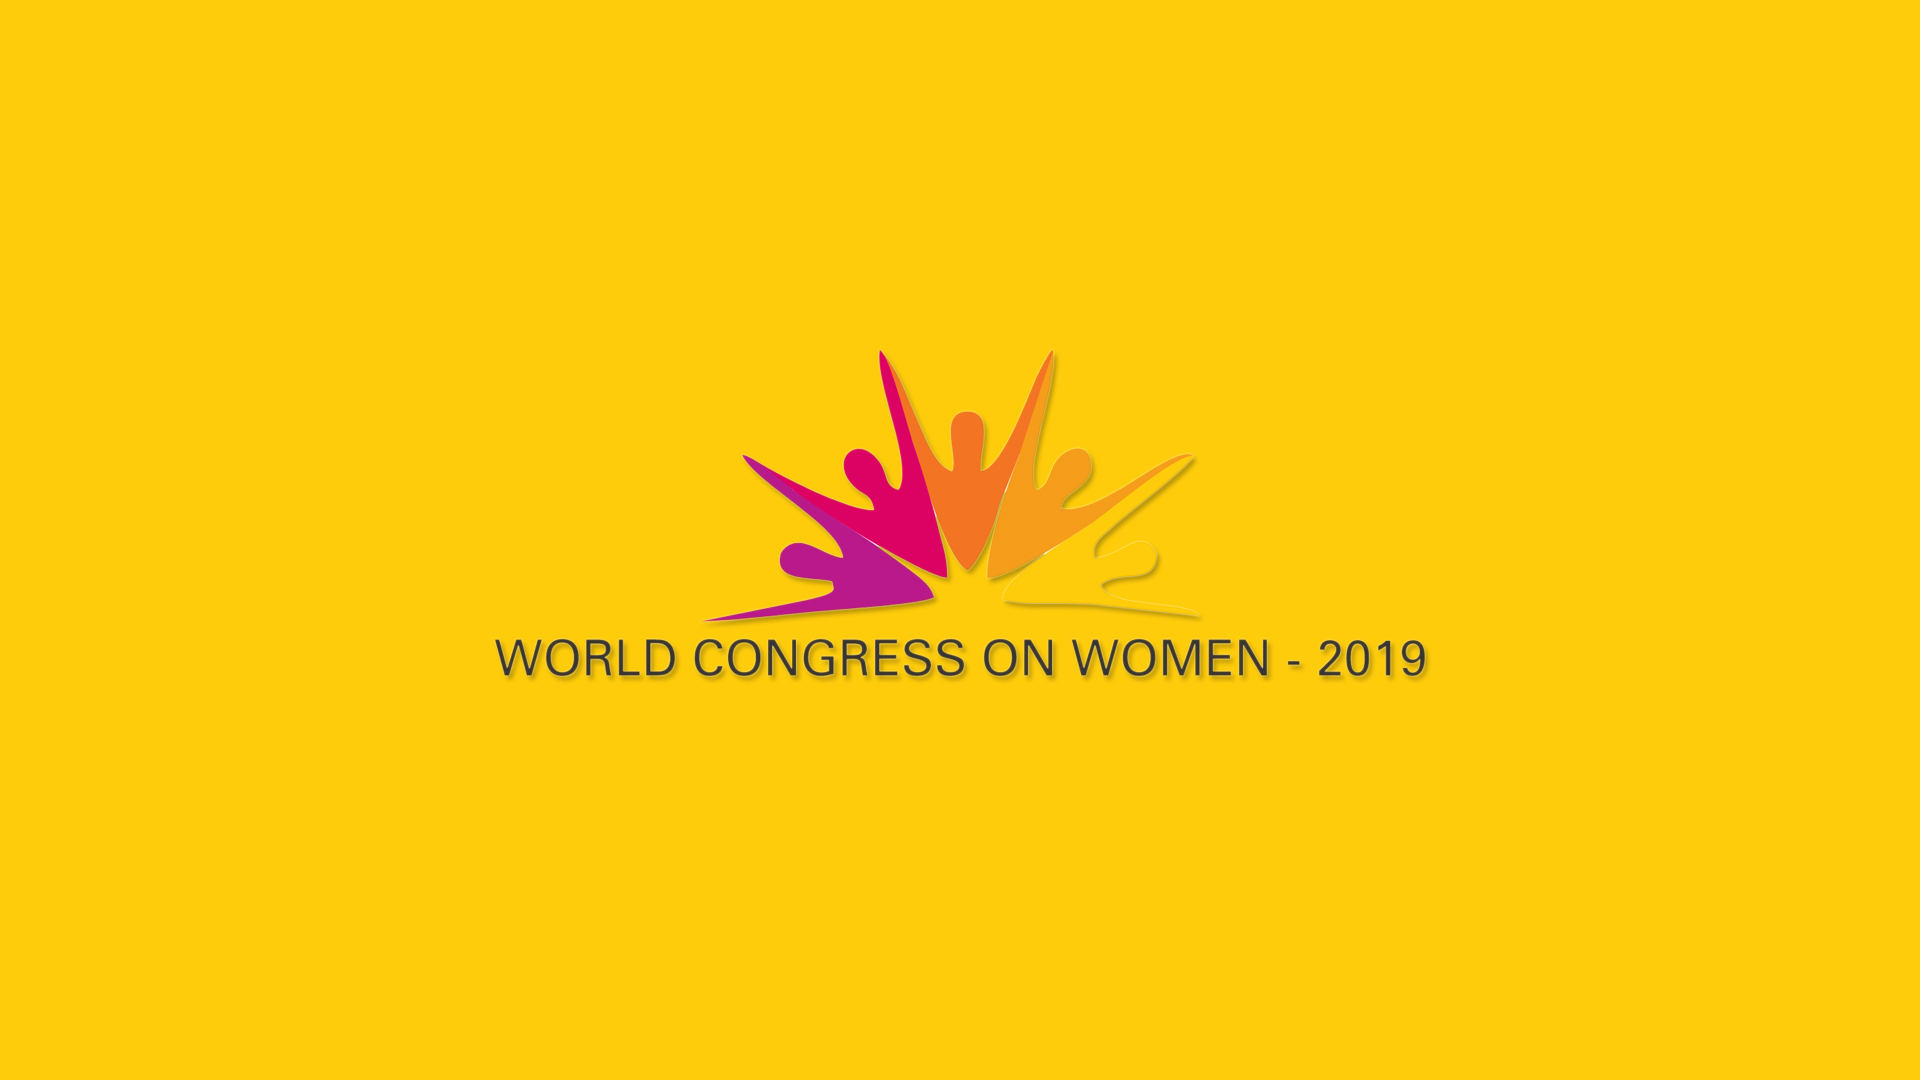 World Congress on Women - Healthcare Conference Logo Design
